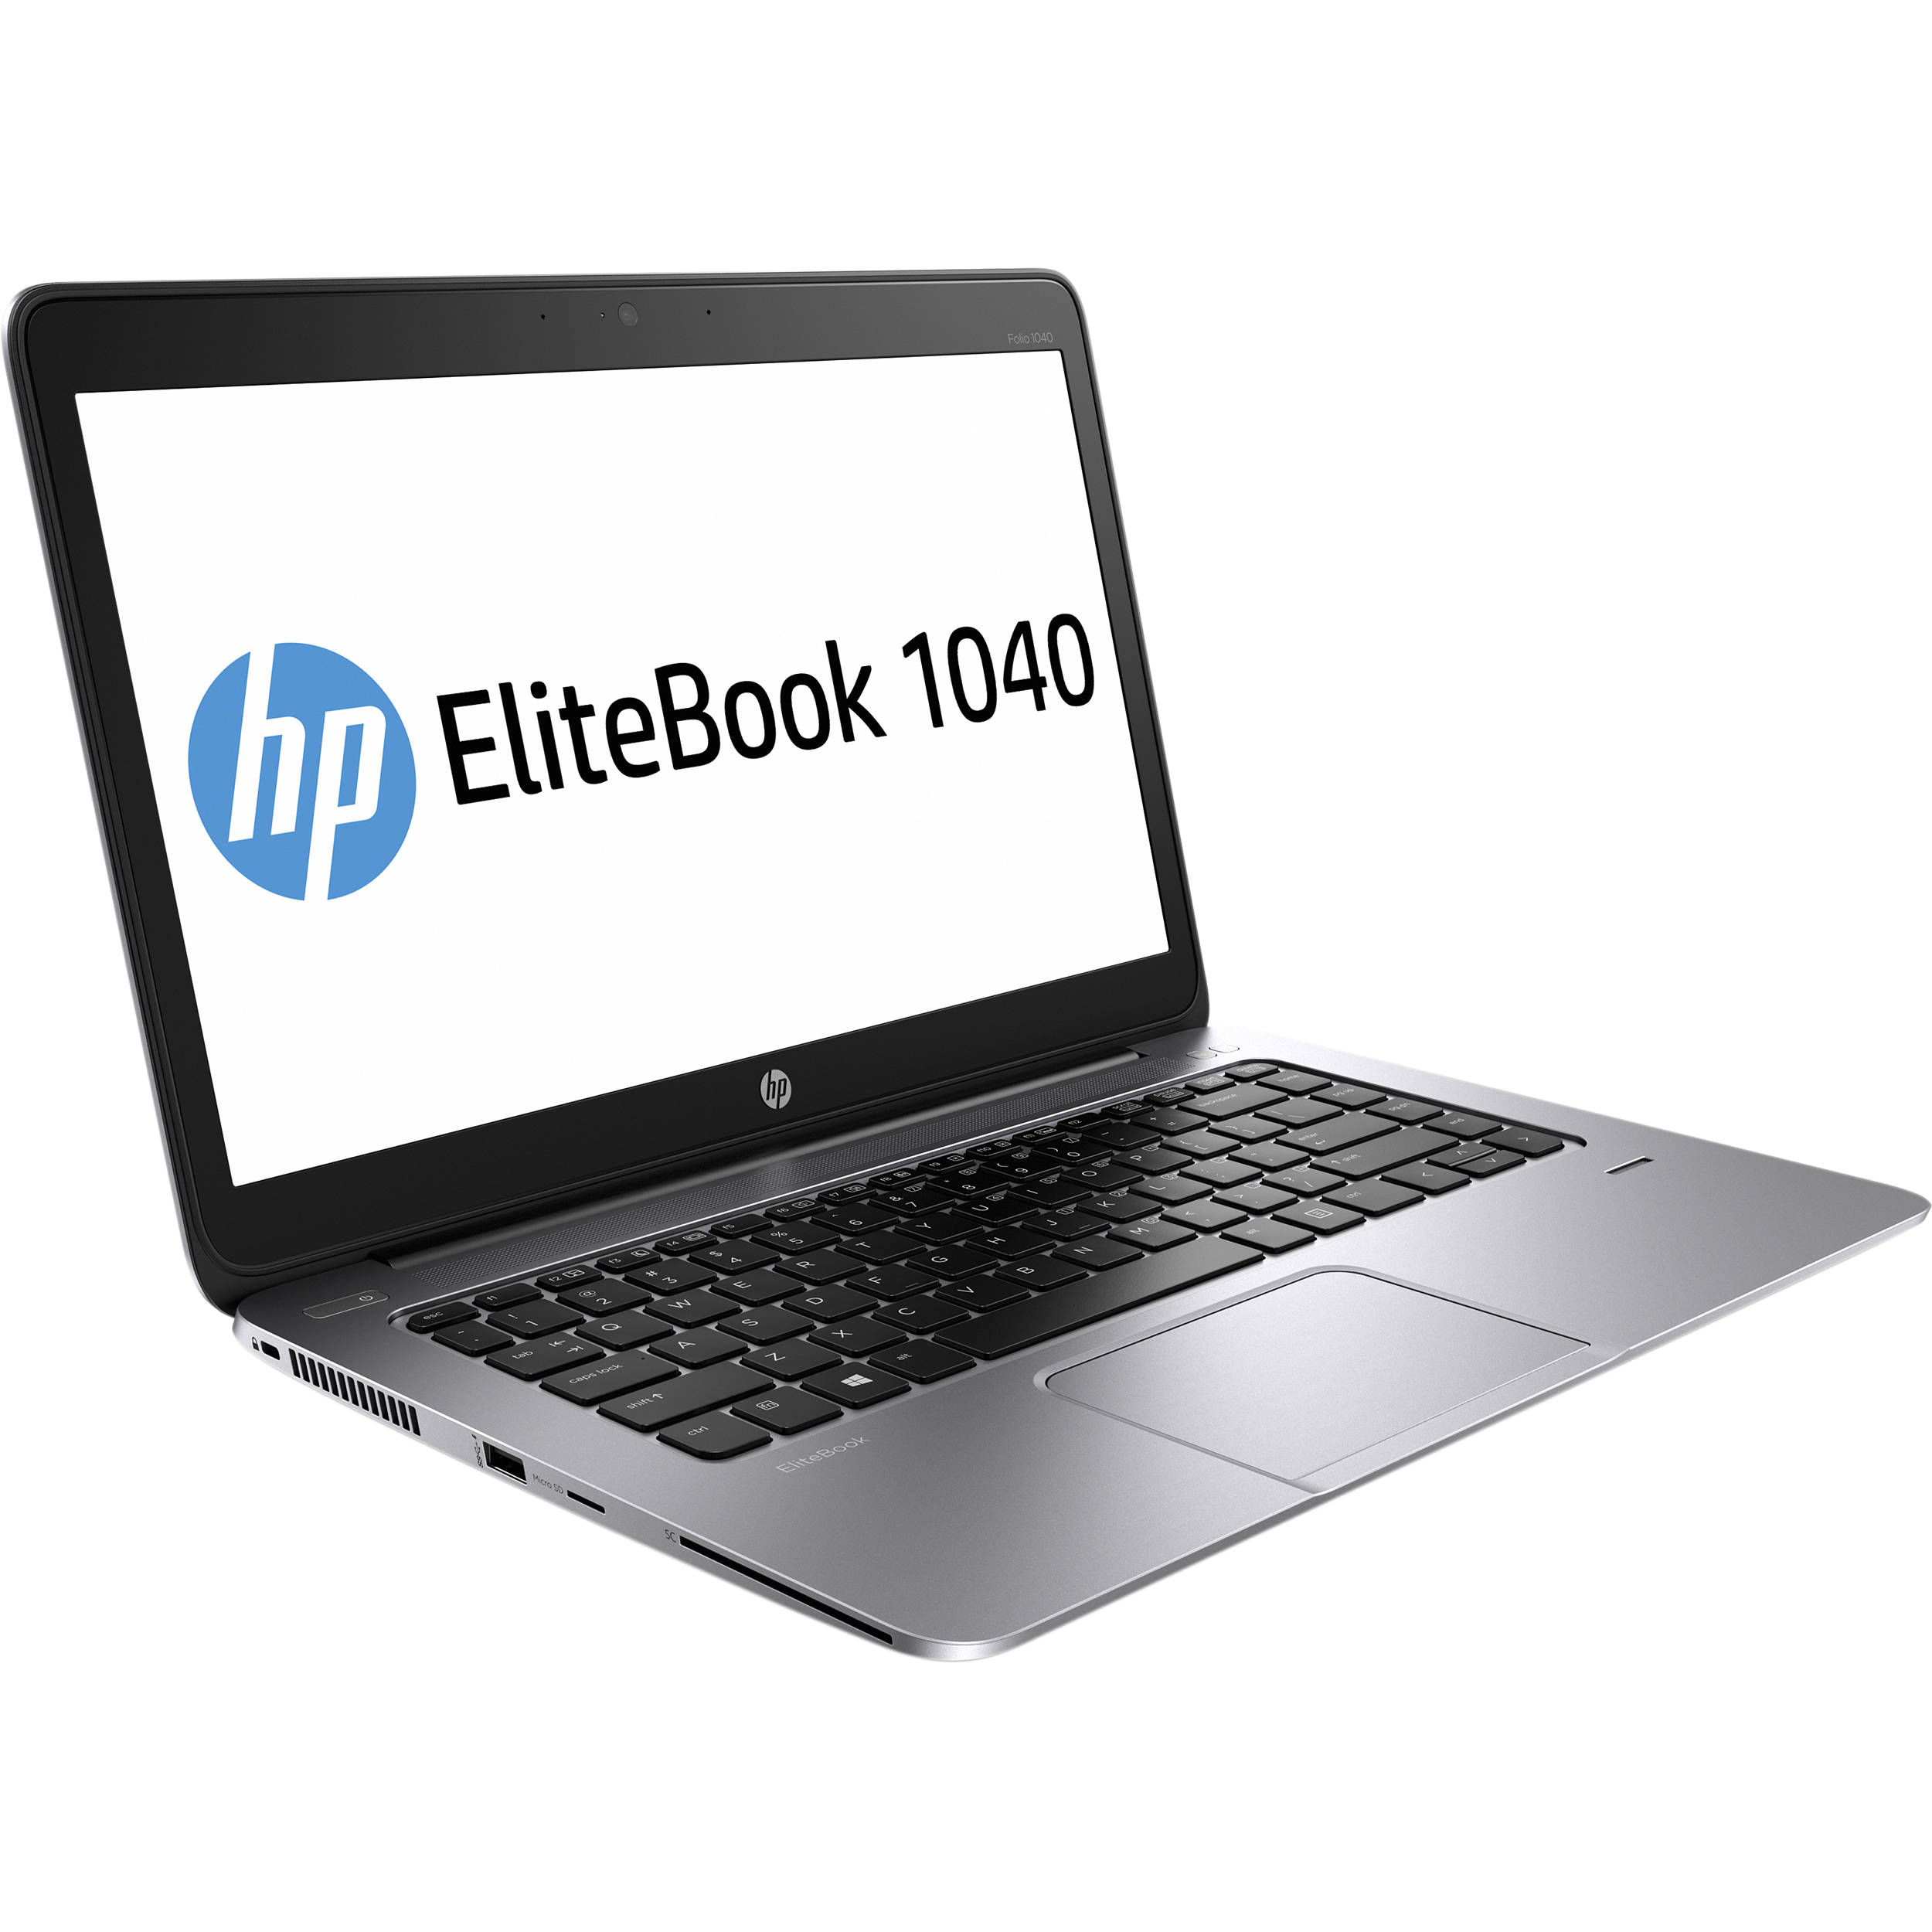 EliteBook Folio 1040 G2 Notebook PC (ENERGY STAR)